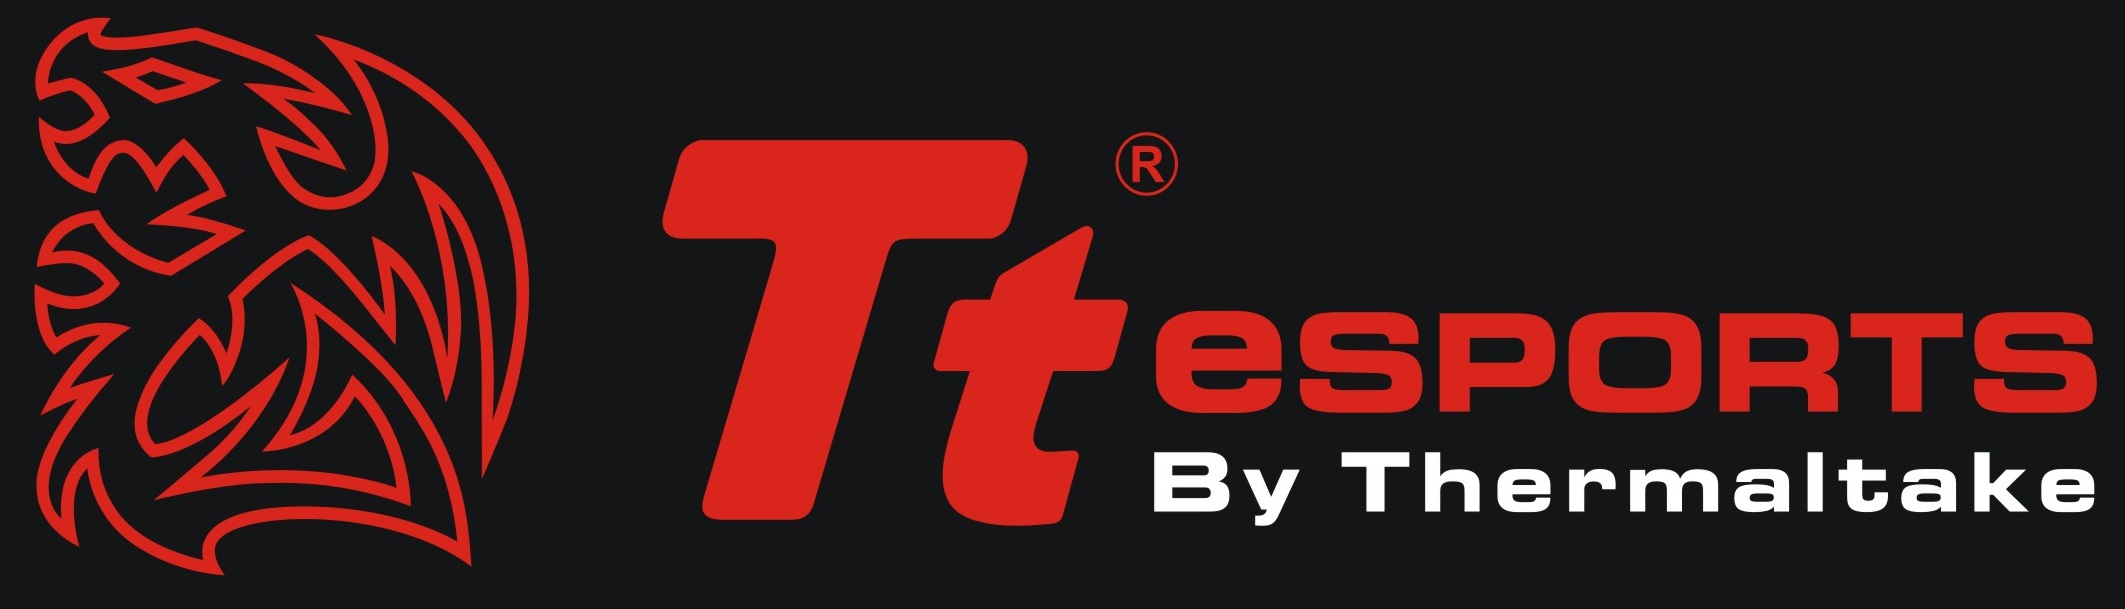 Tt-eSPORTS-logo